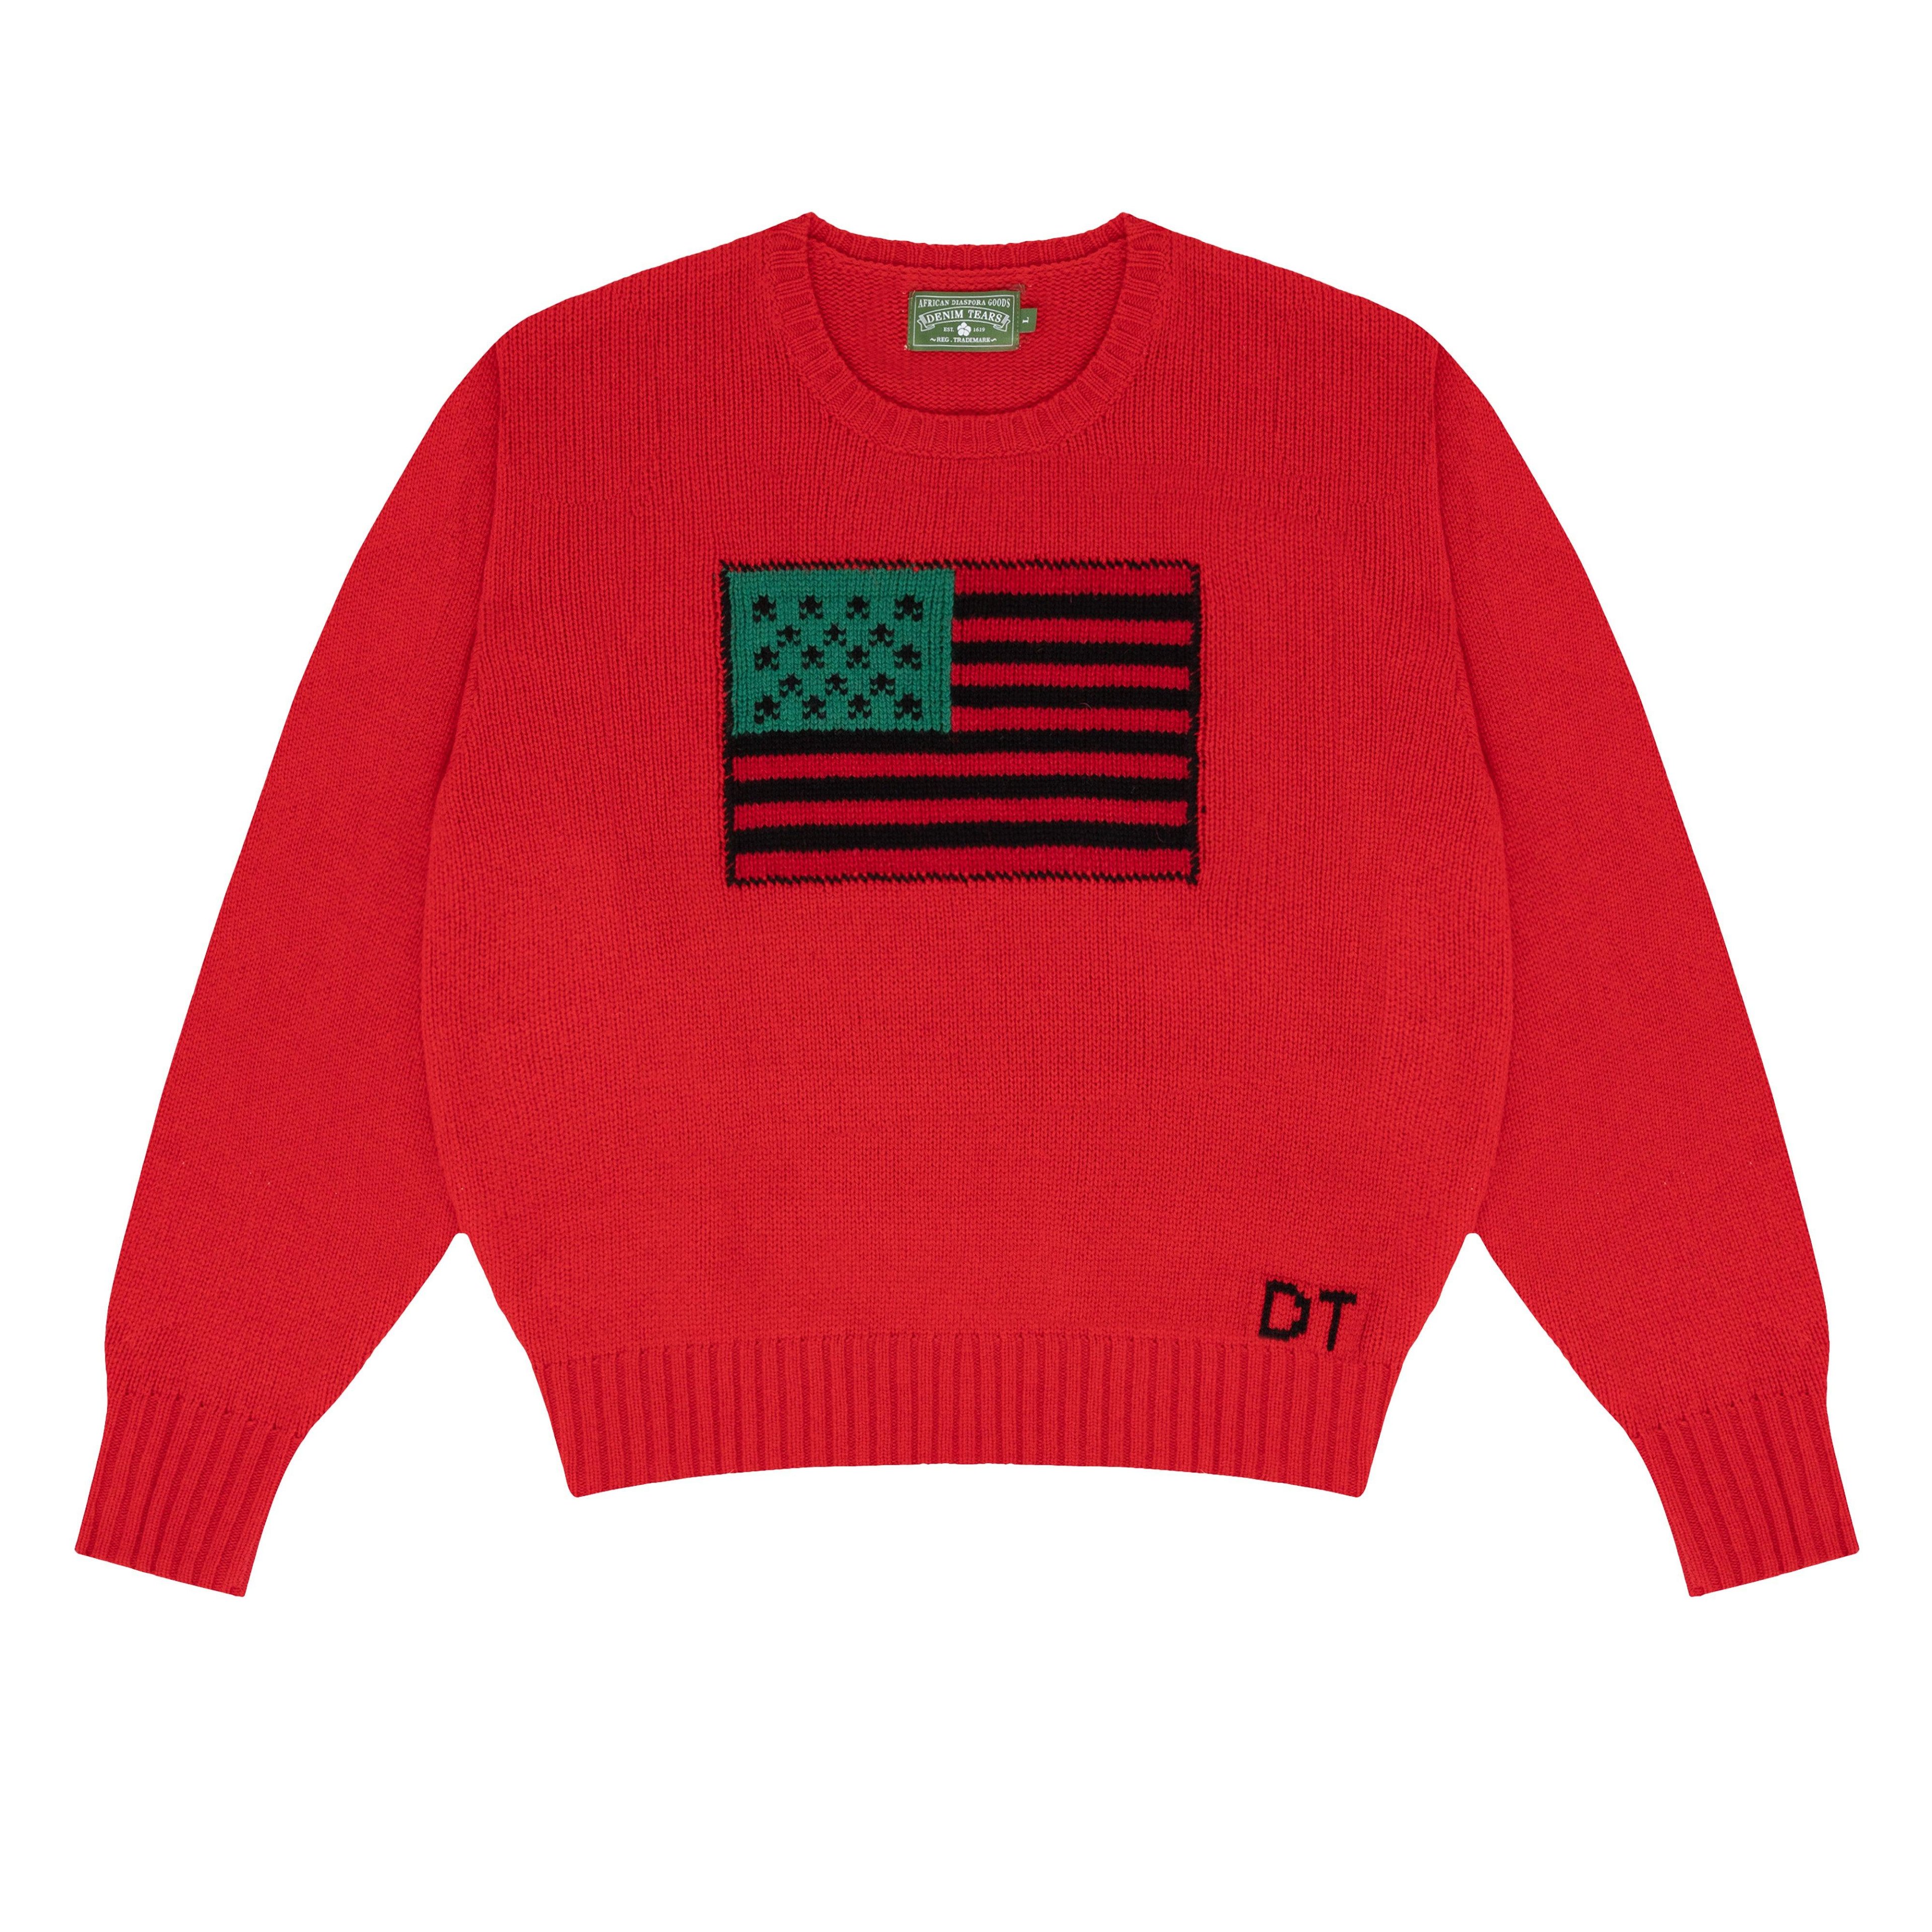 Denim Tears - 1619 Pan African Flag Sweater - (Red) by DENIM TEARS